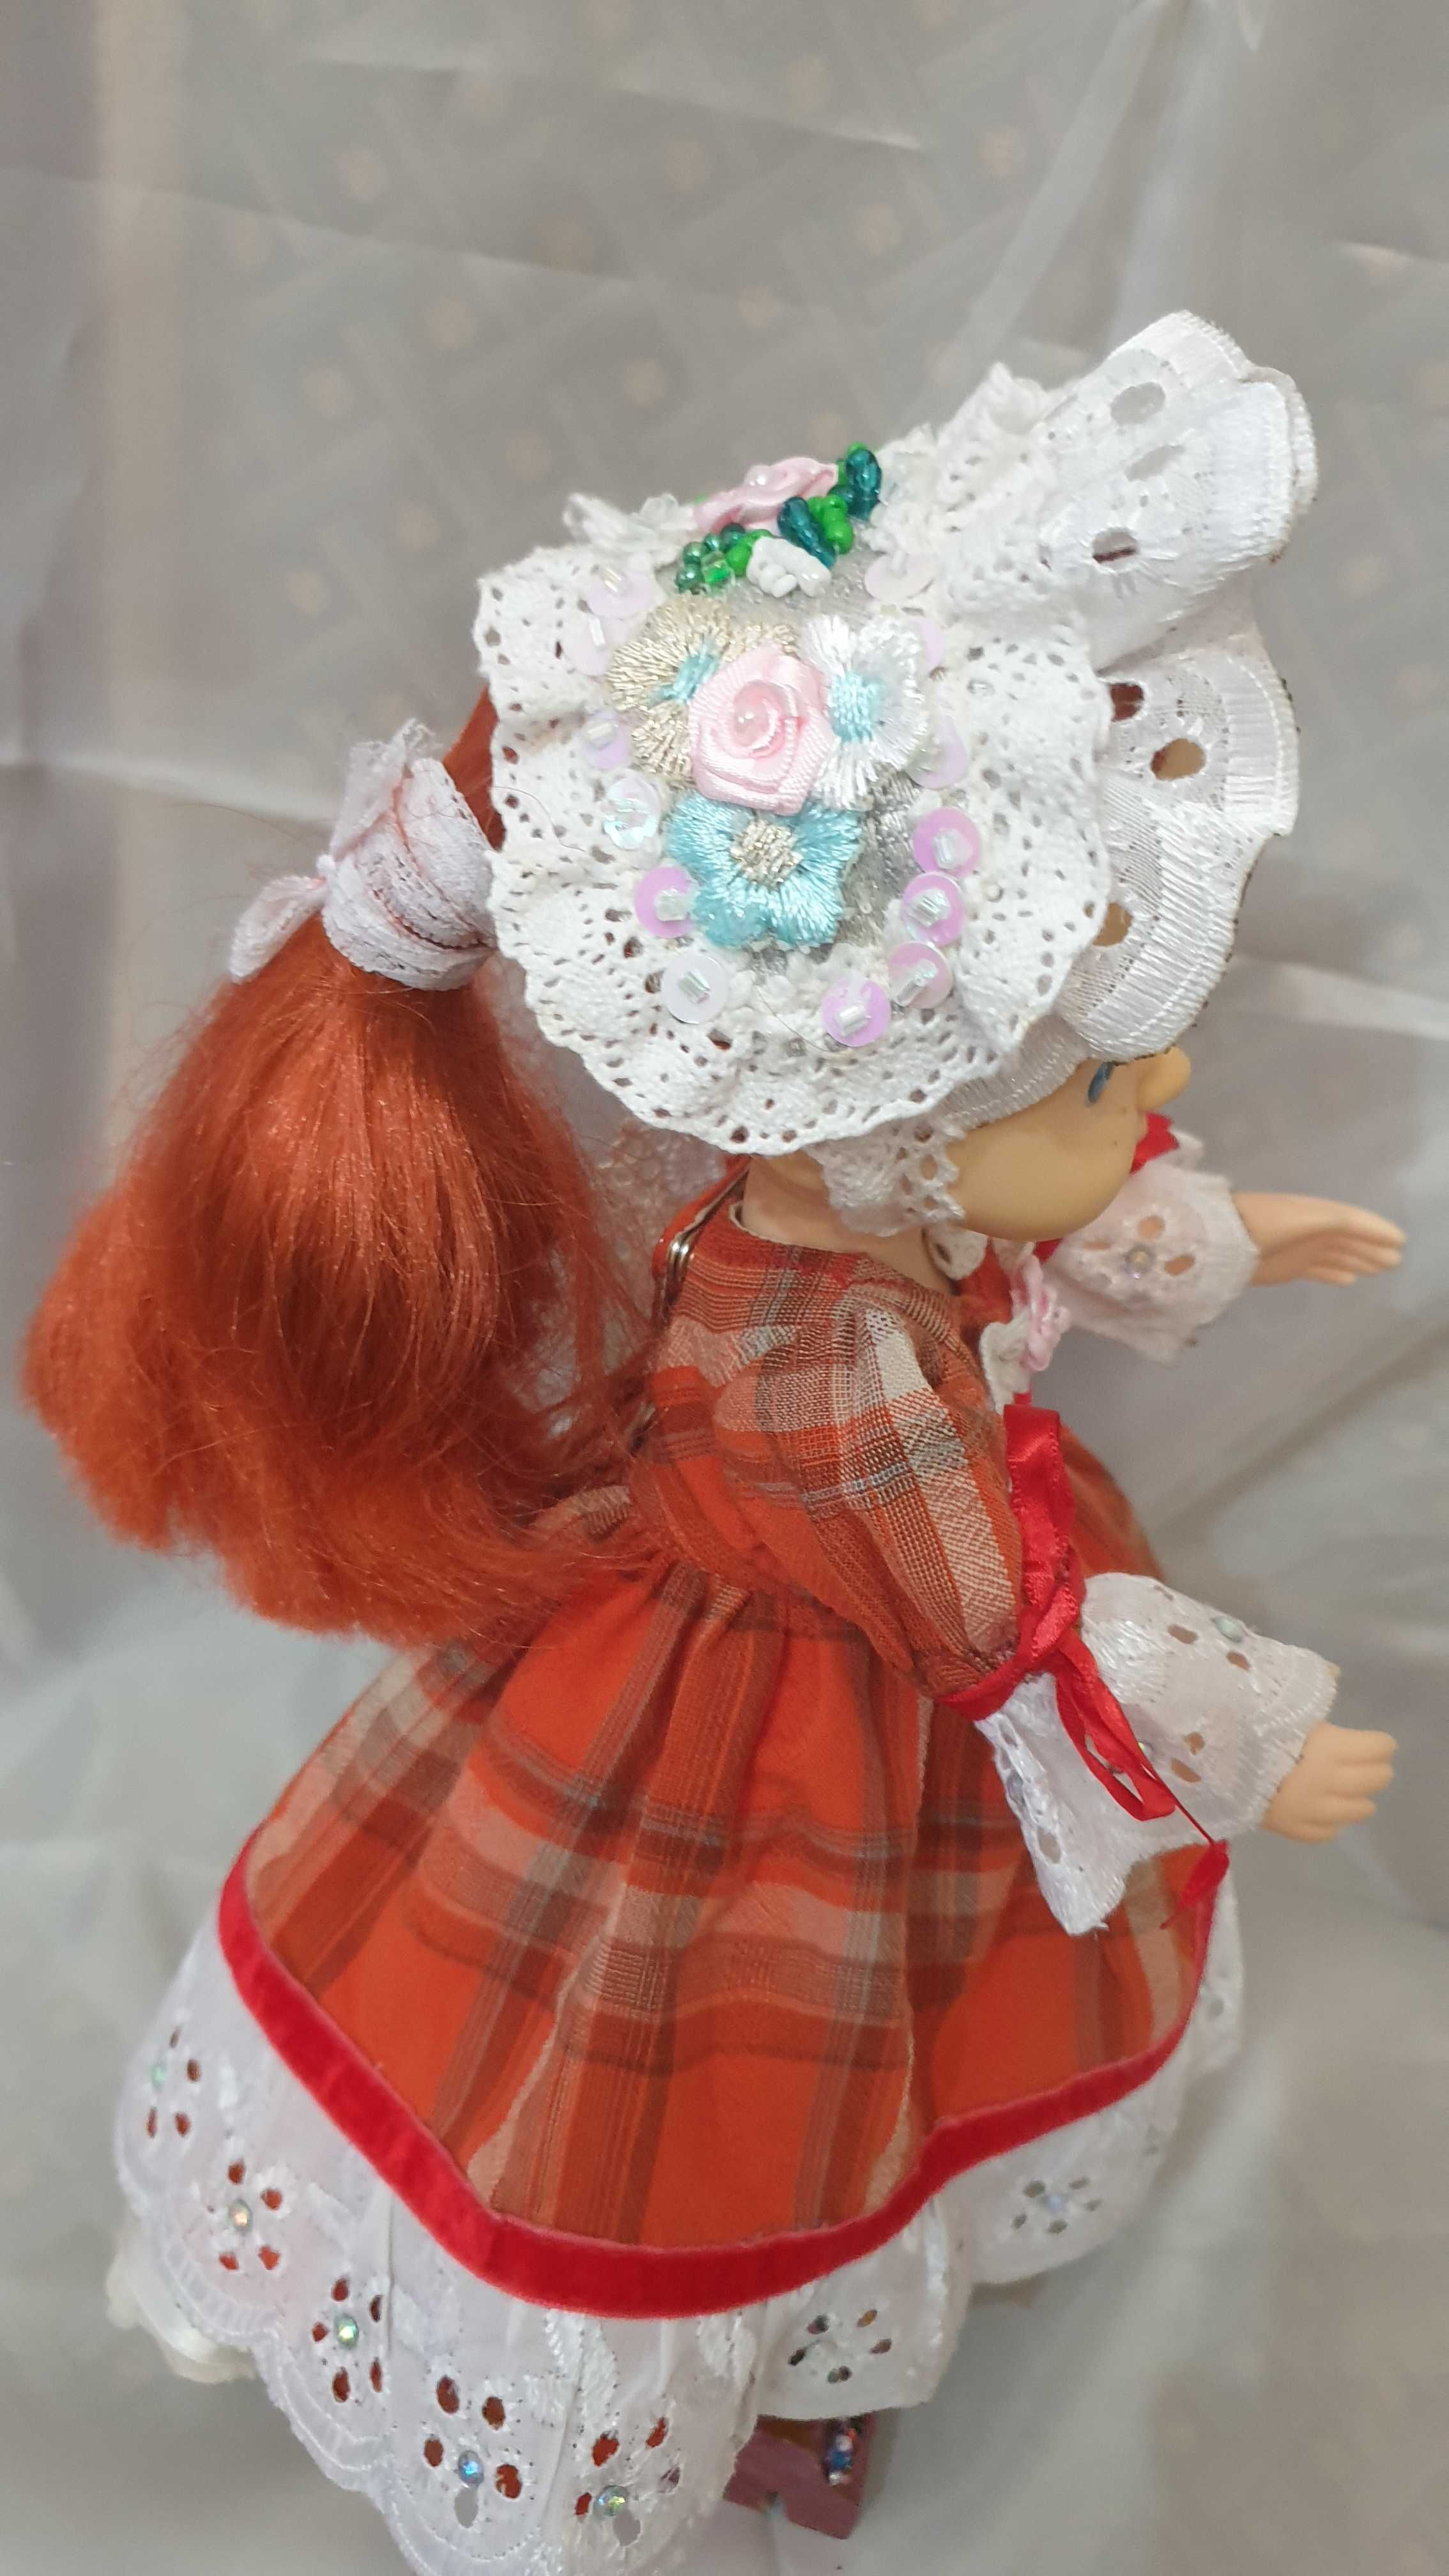 Кукла в винтажном стиле.